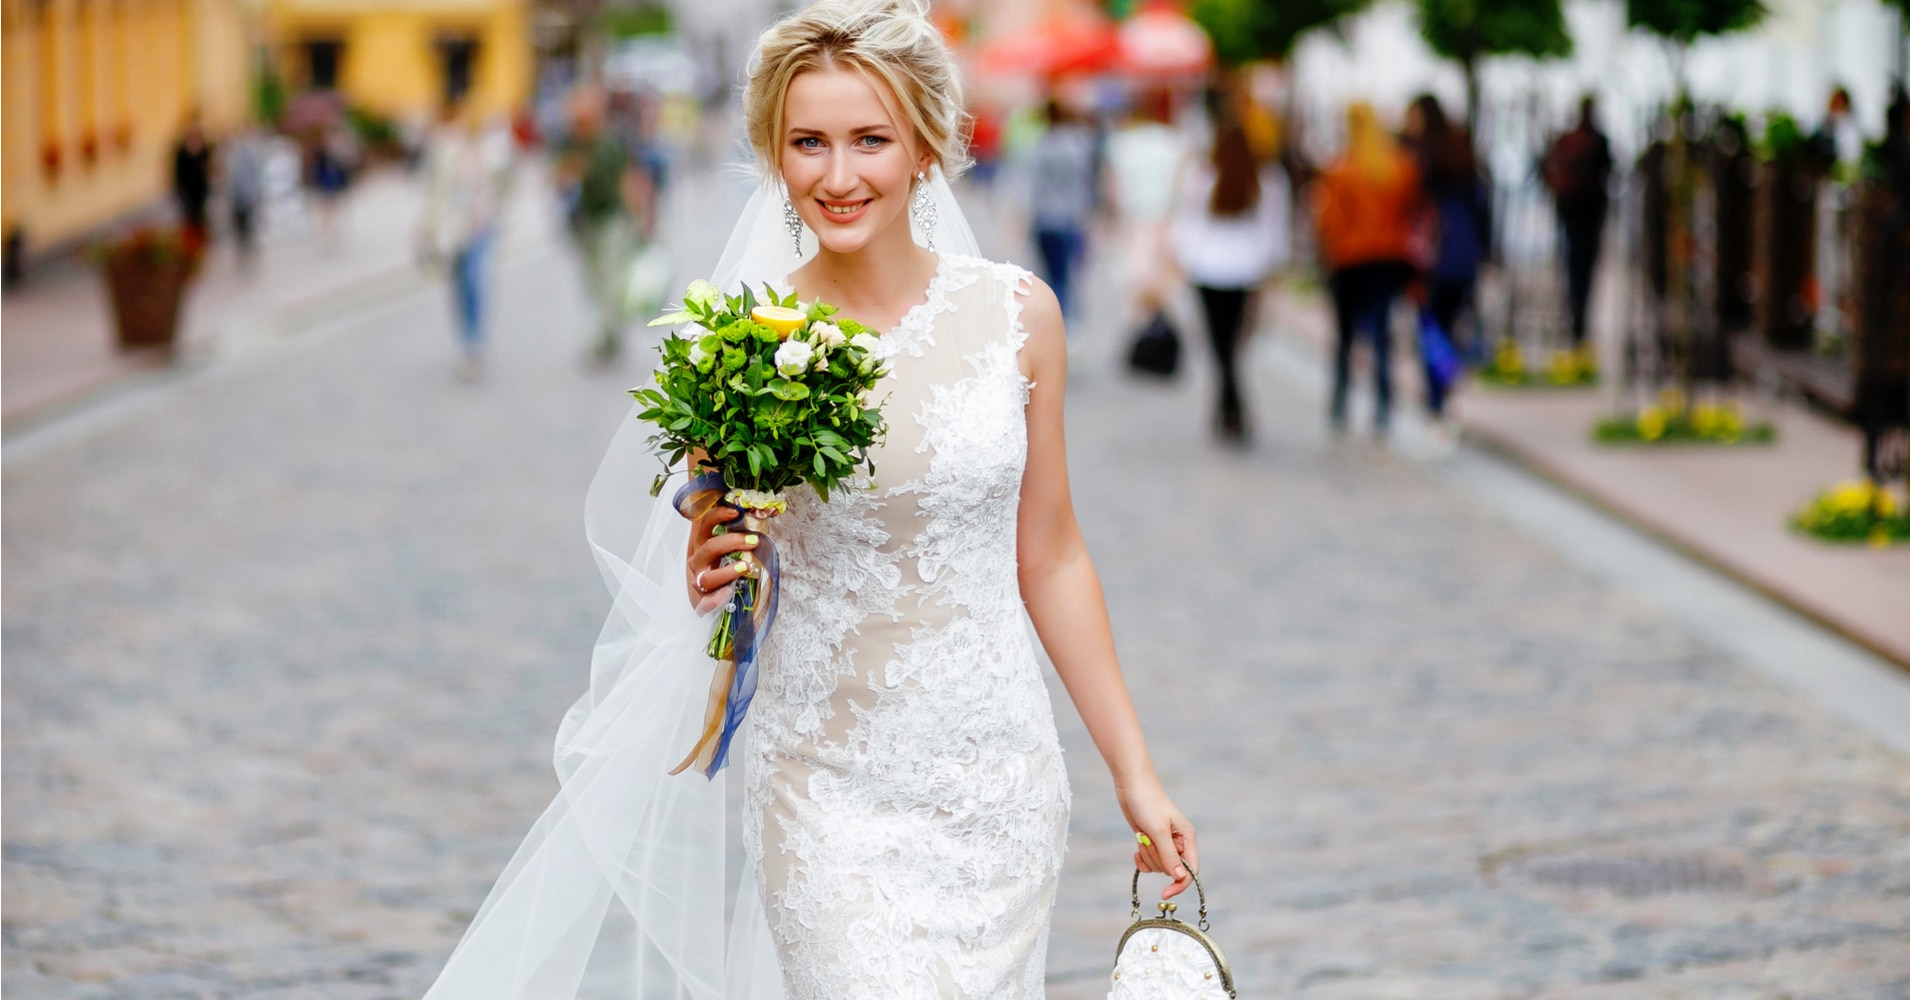 What Wedding Dress Suits Me? - Quiz - Quizony.com